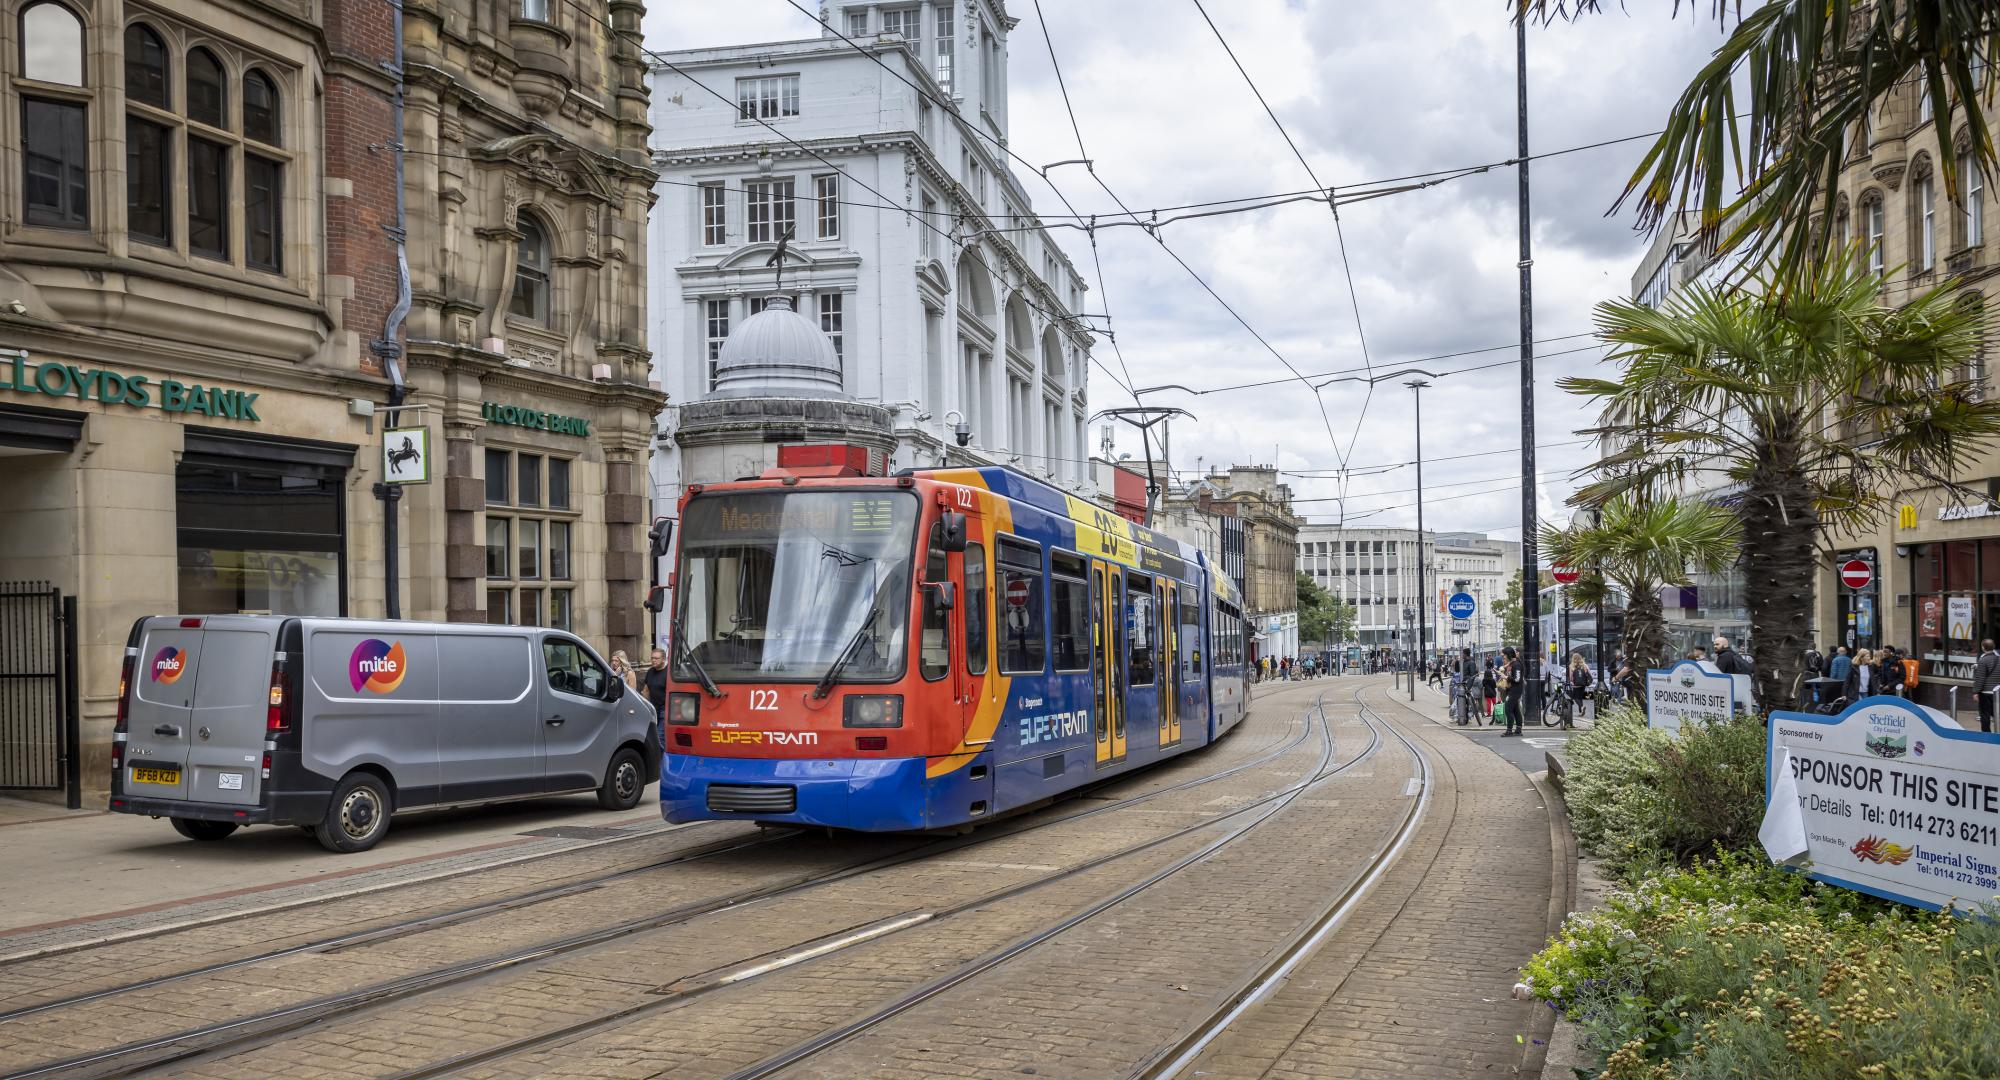 Supertram in Sheffield city centre